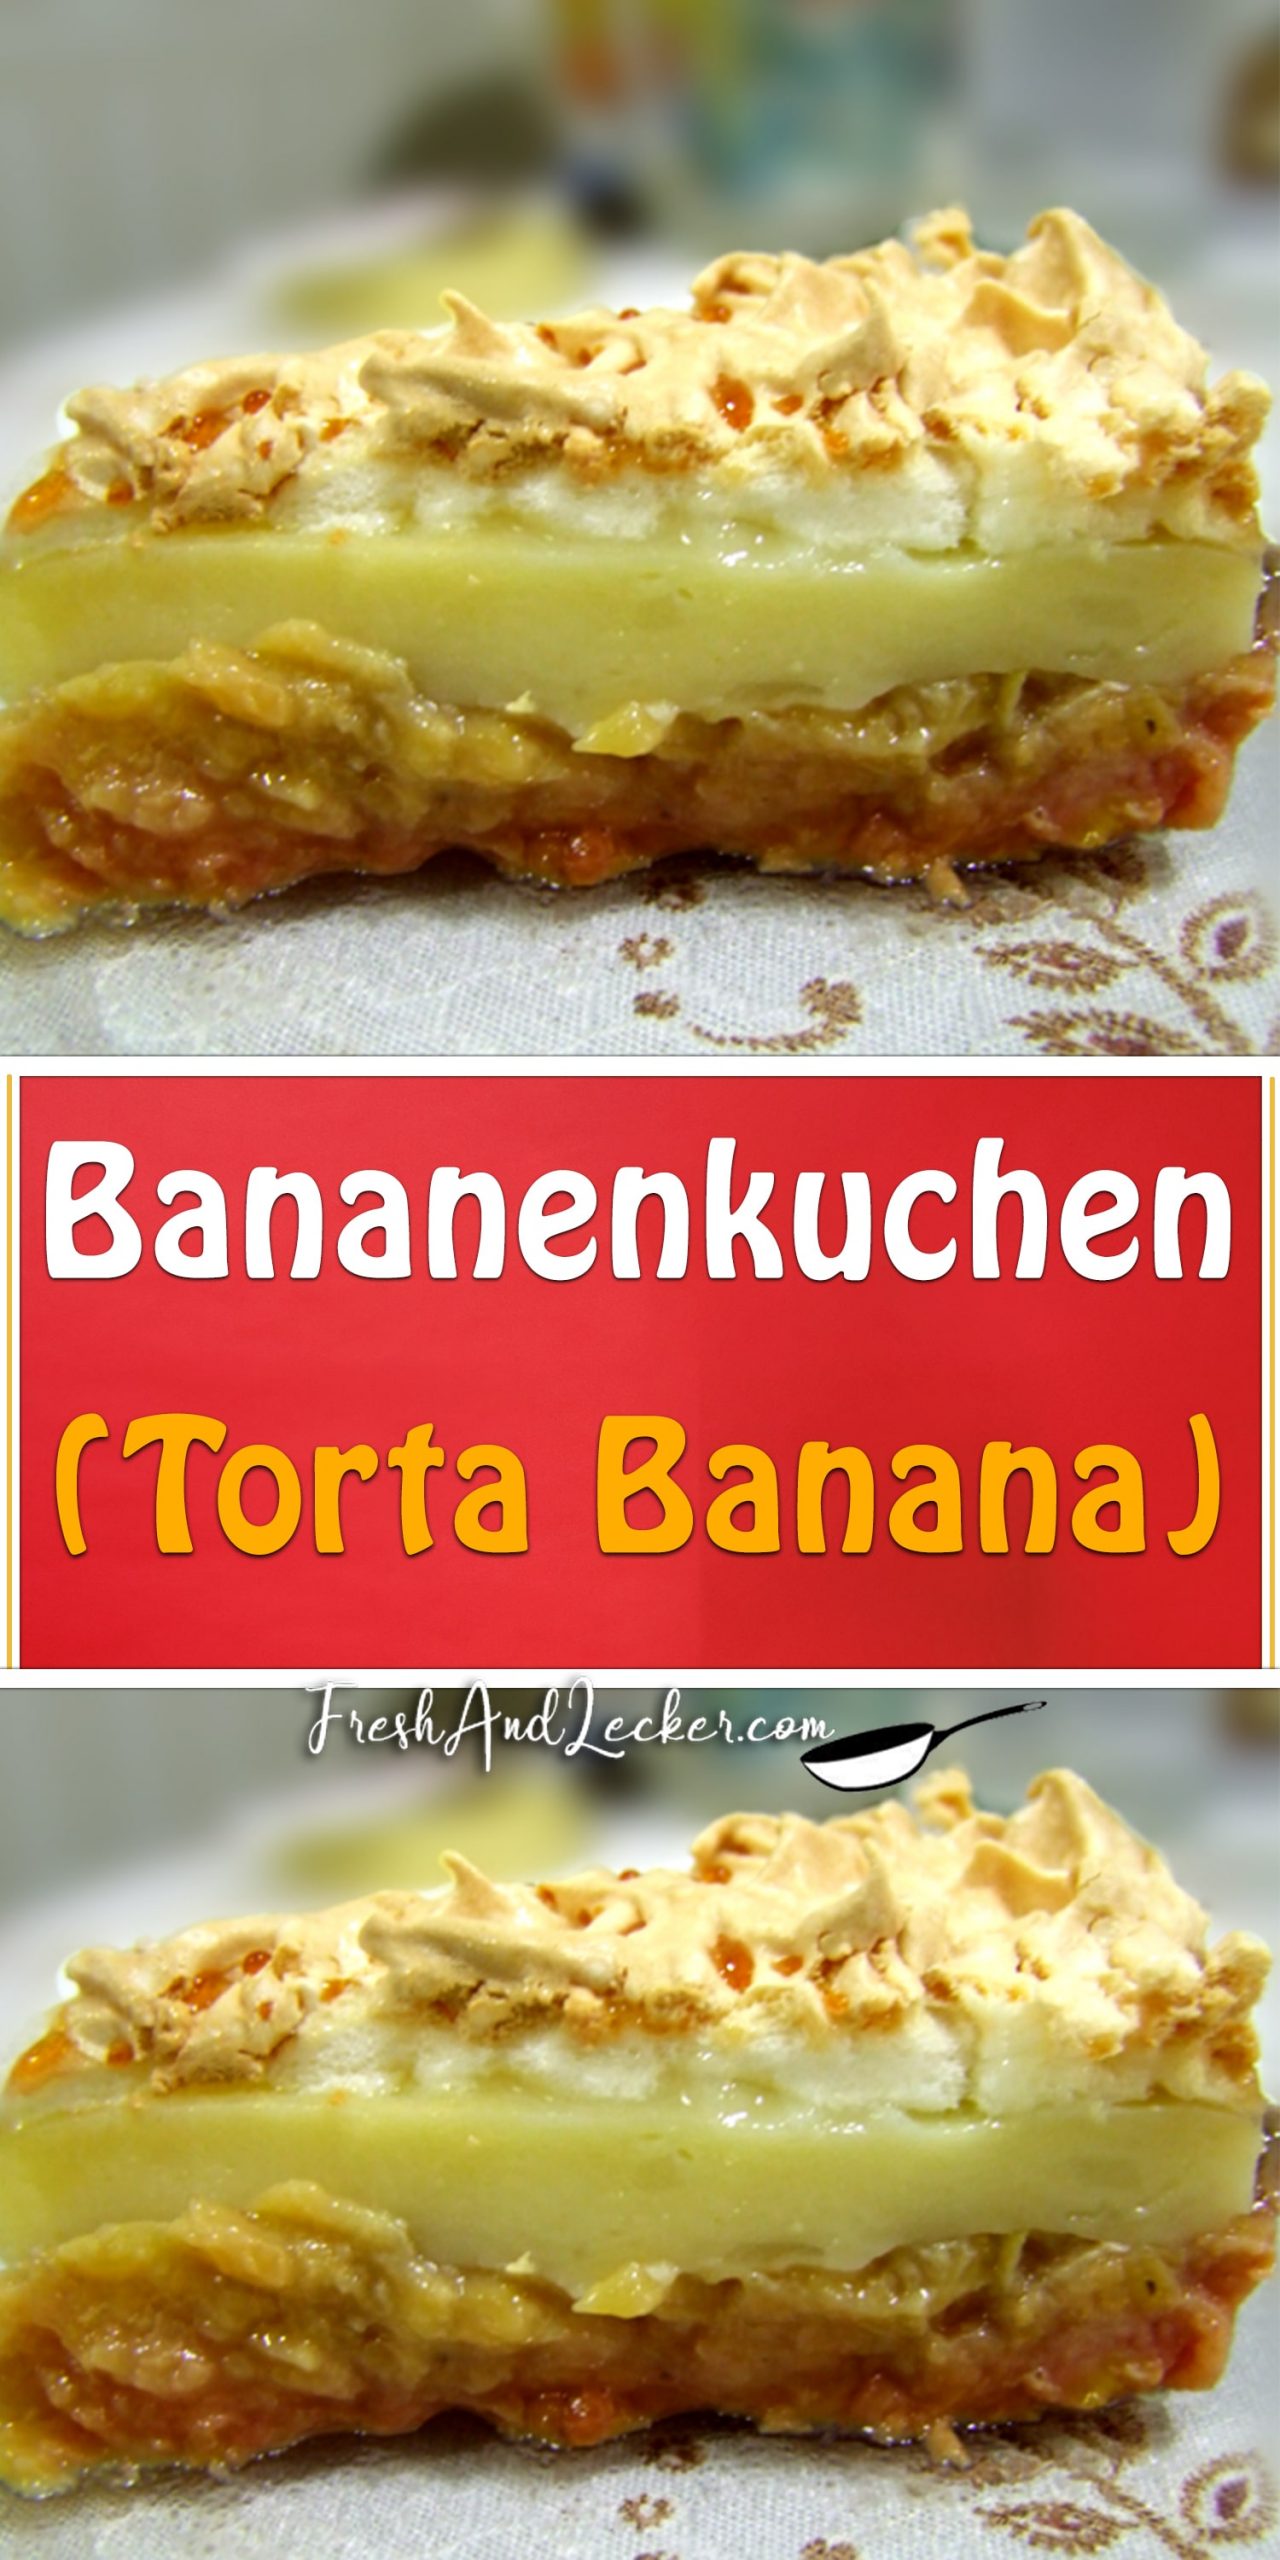 Bananenkuchen (Torta Banana) - Fresh Lecker